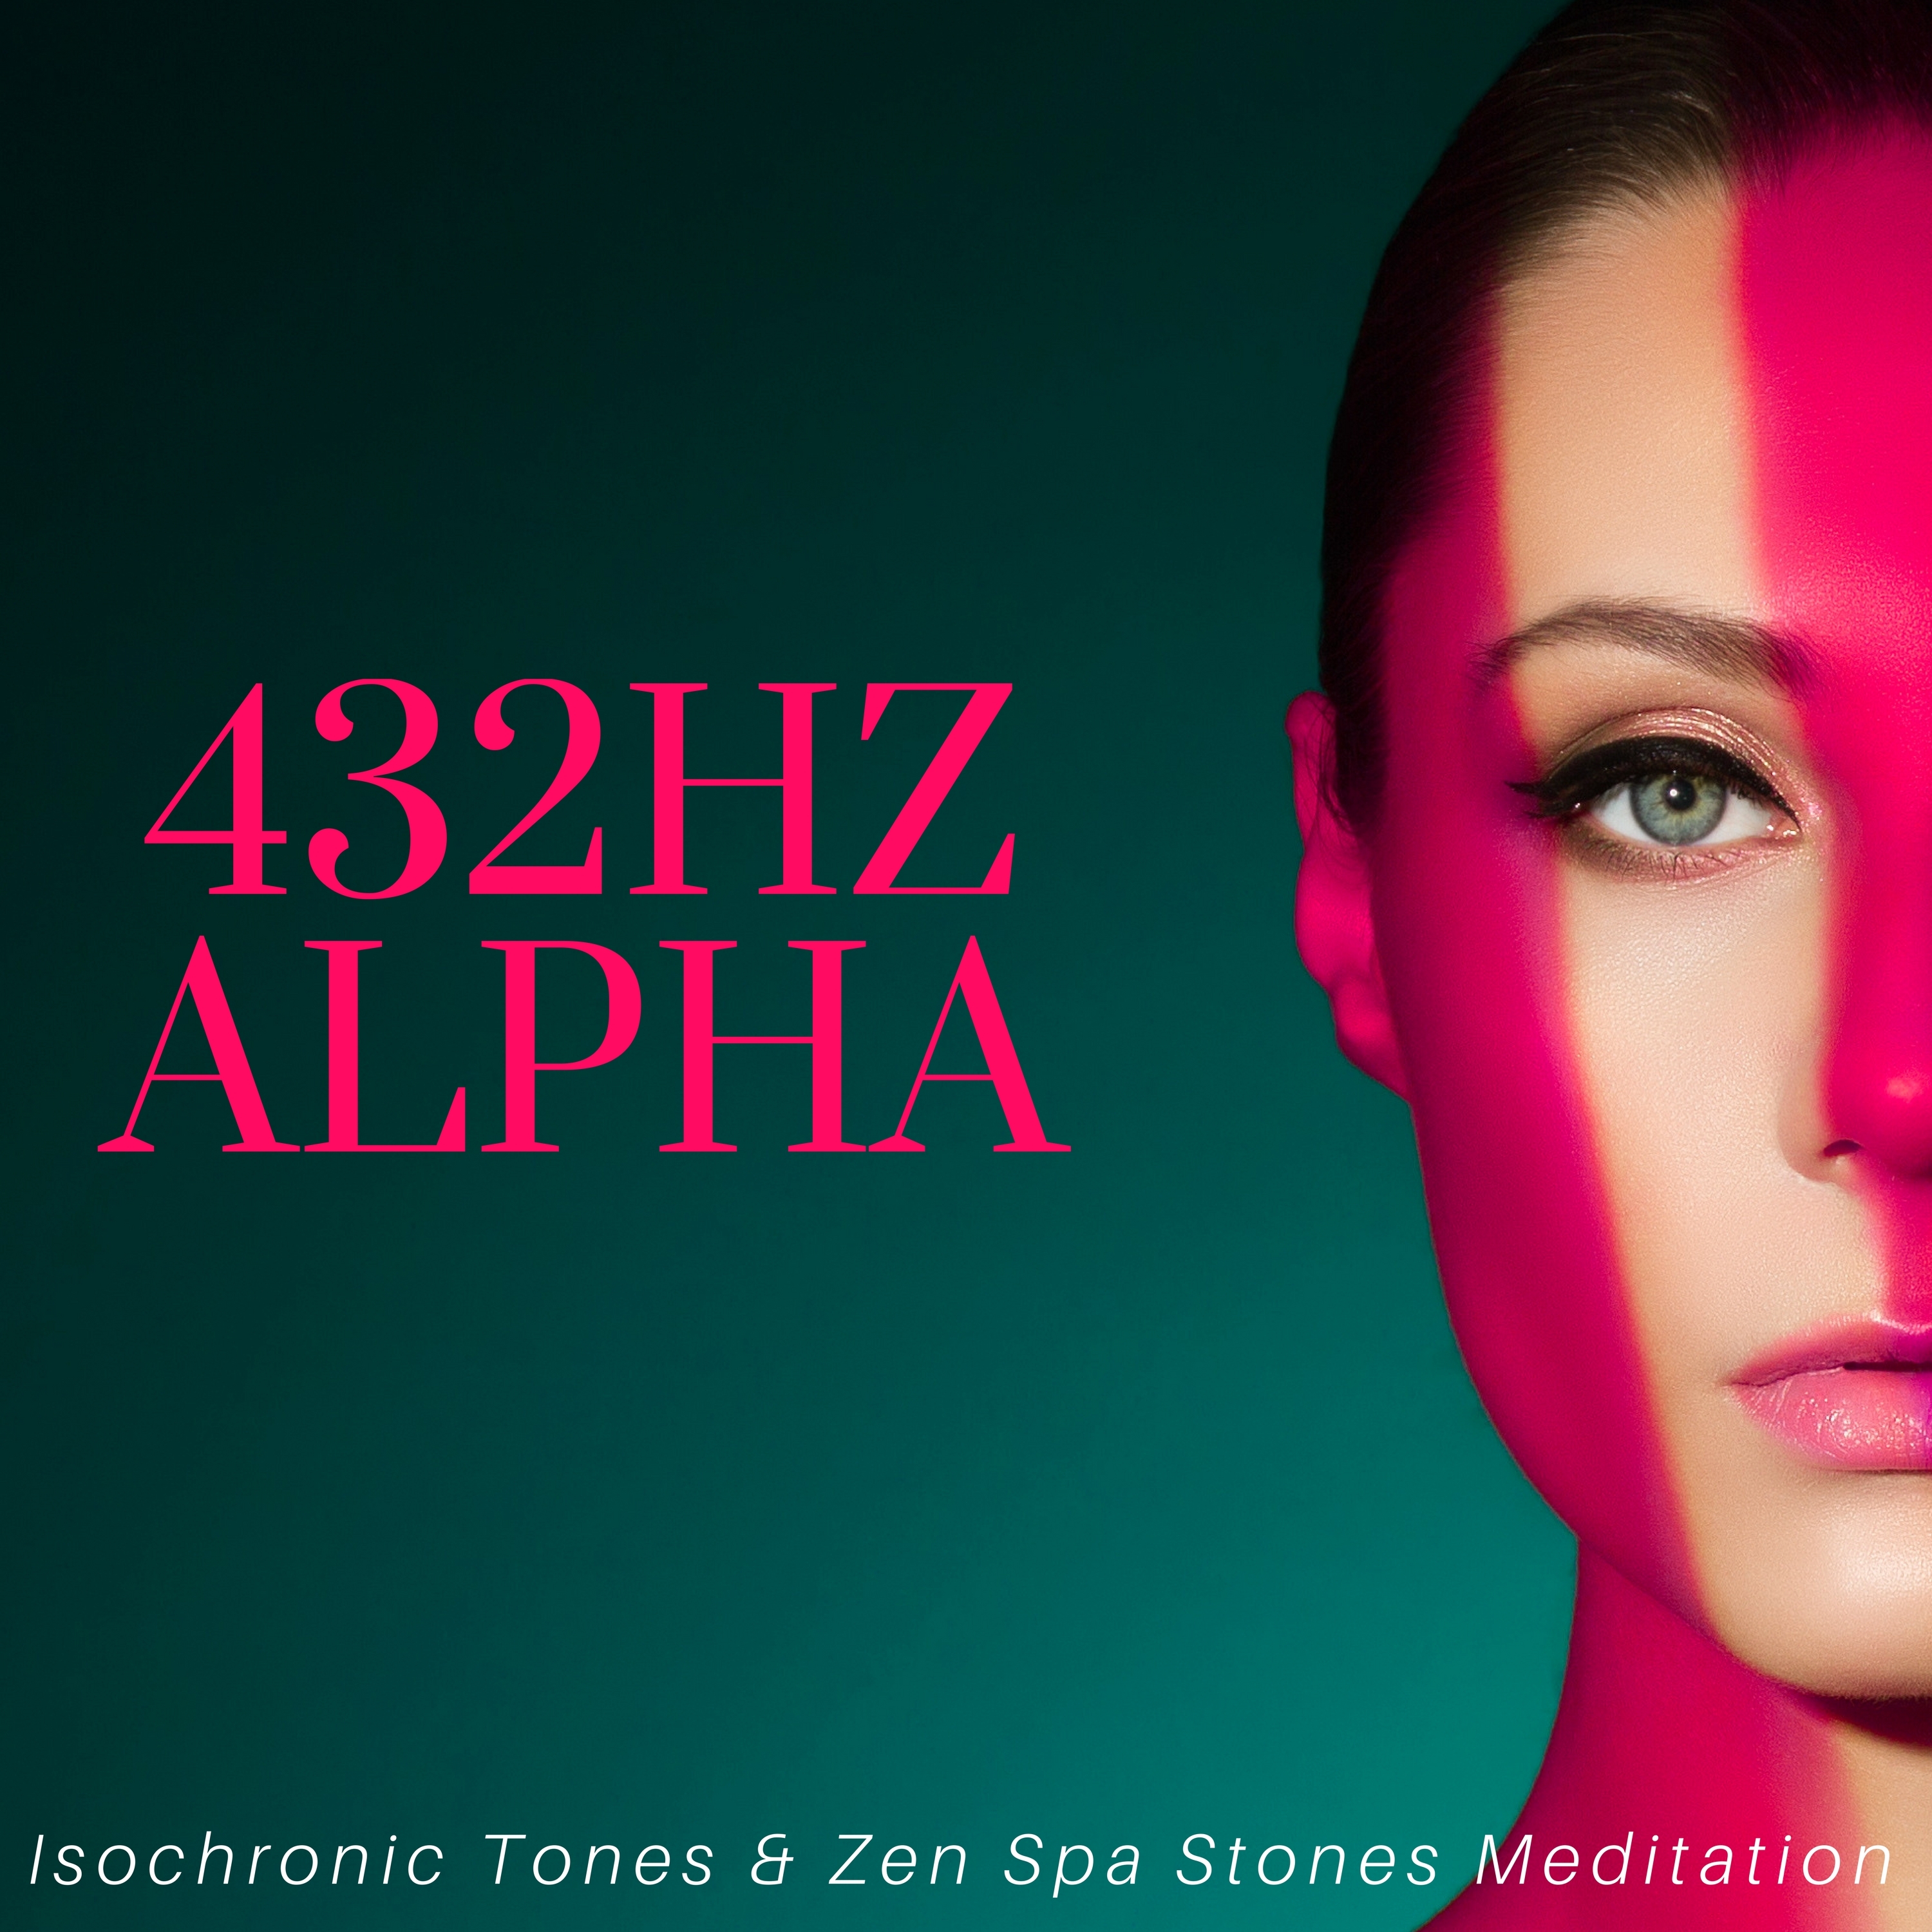 432HZ Alpha: Isochronic Tones & Zen Spa Stones Meditation